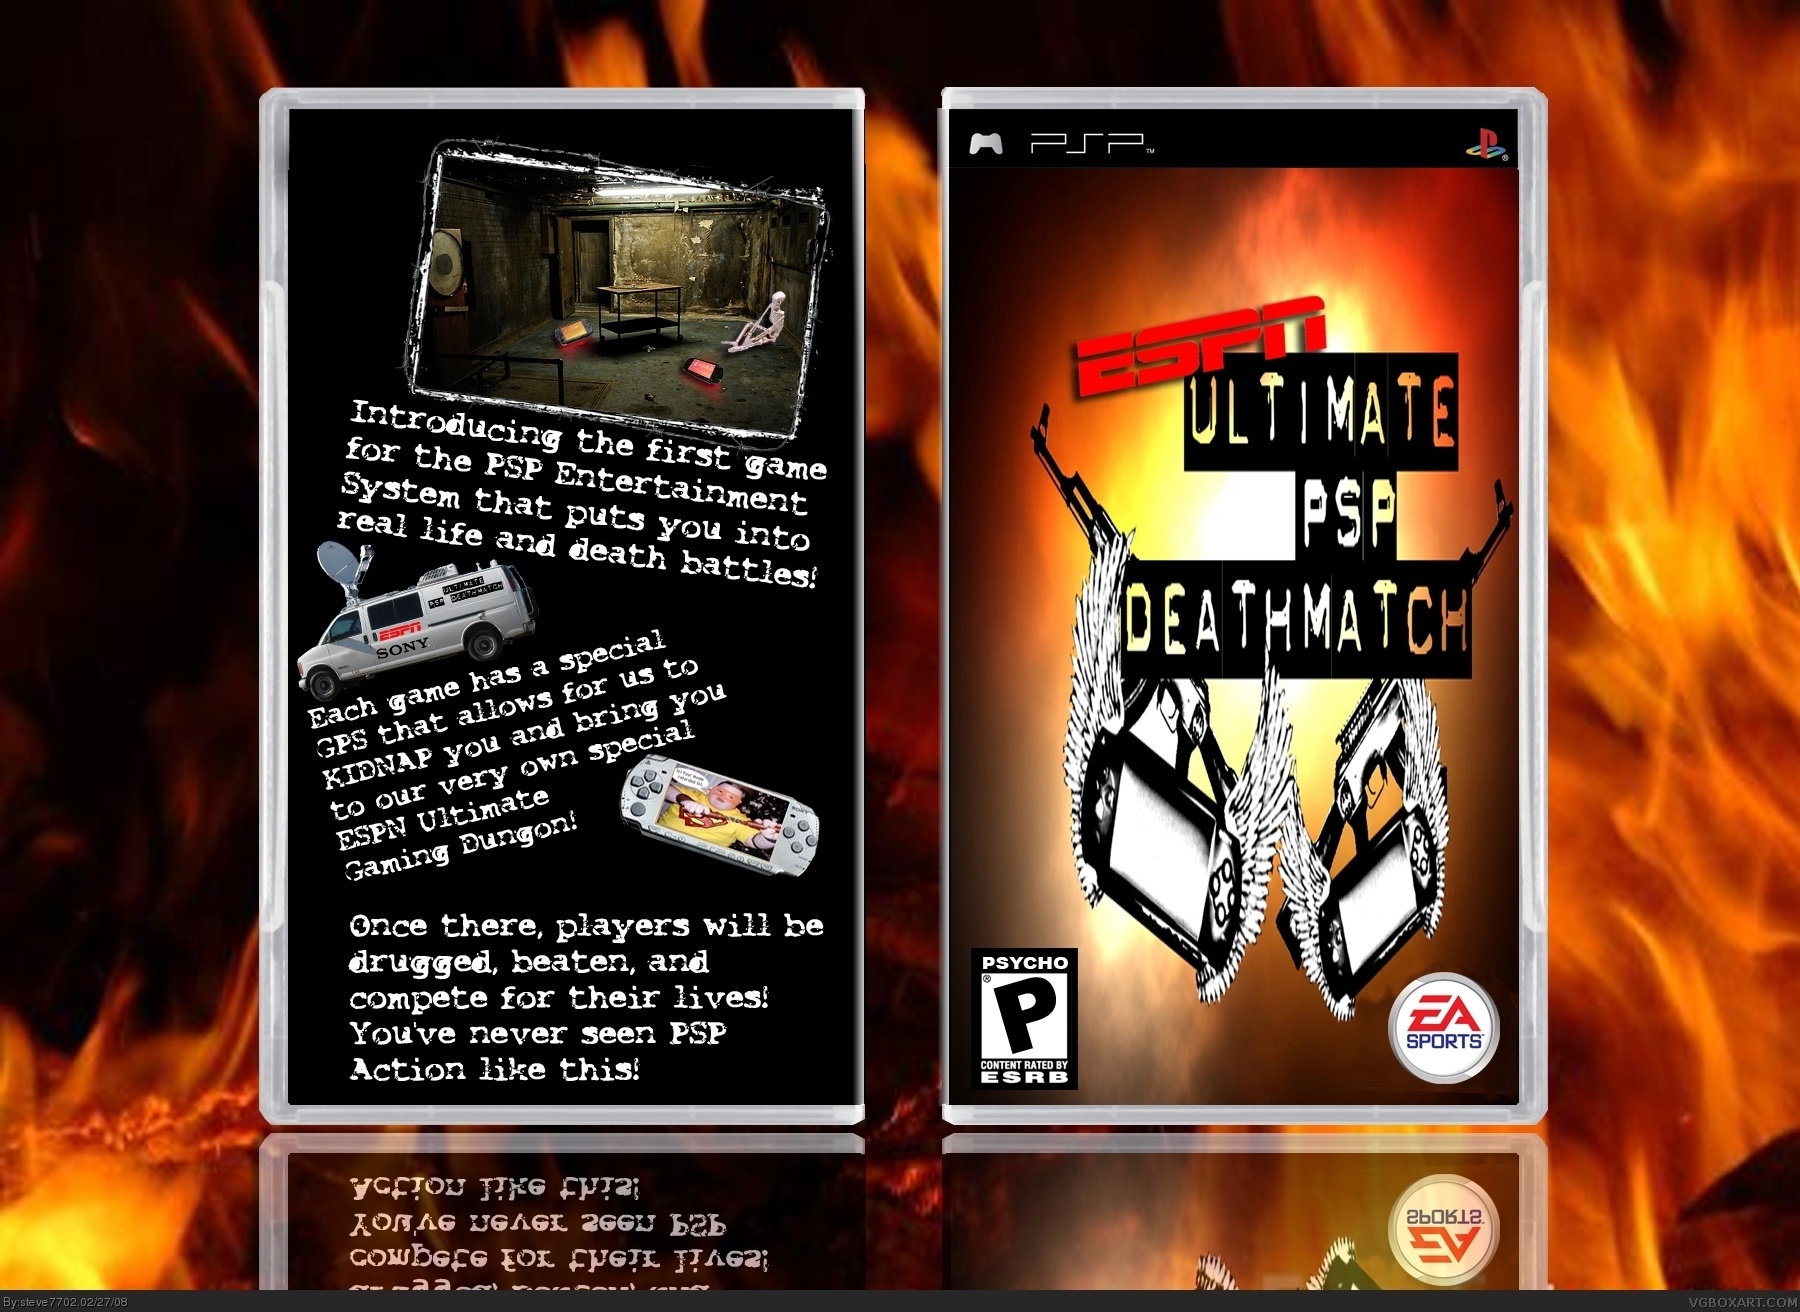 ESPN Ultimate PSP Deathmatch box cover